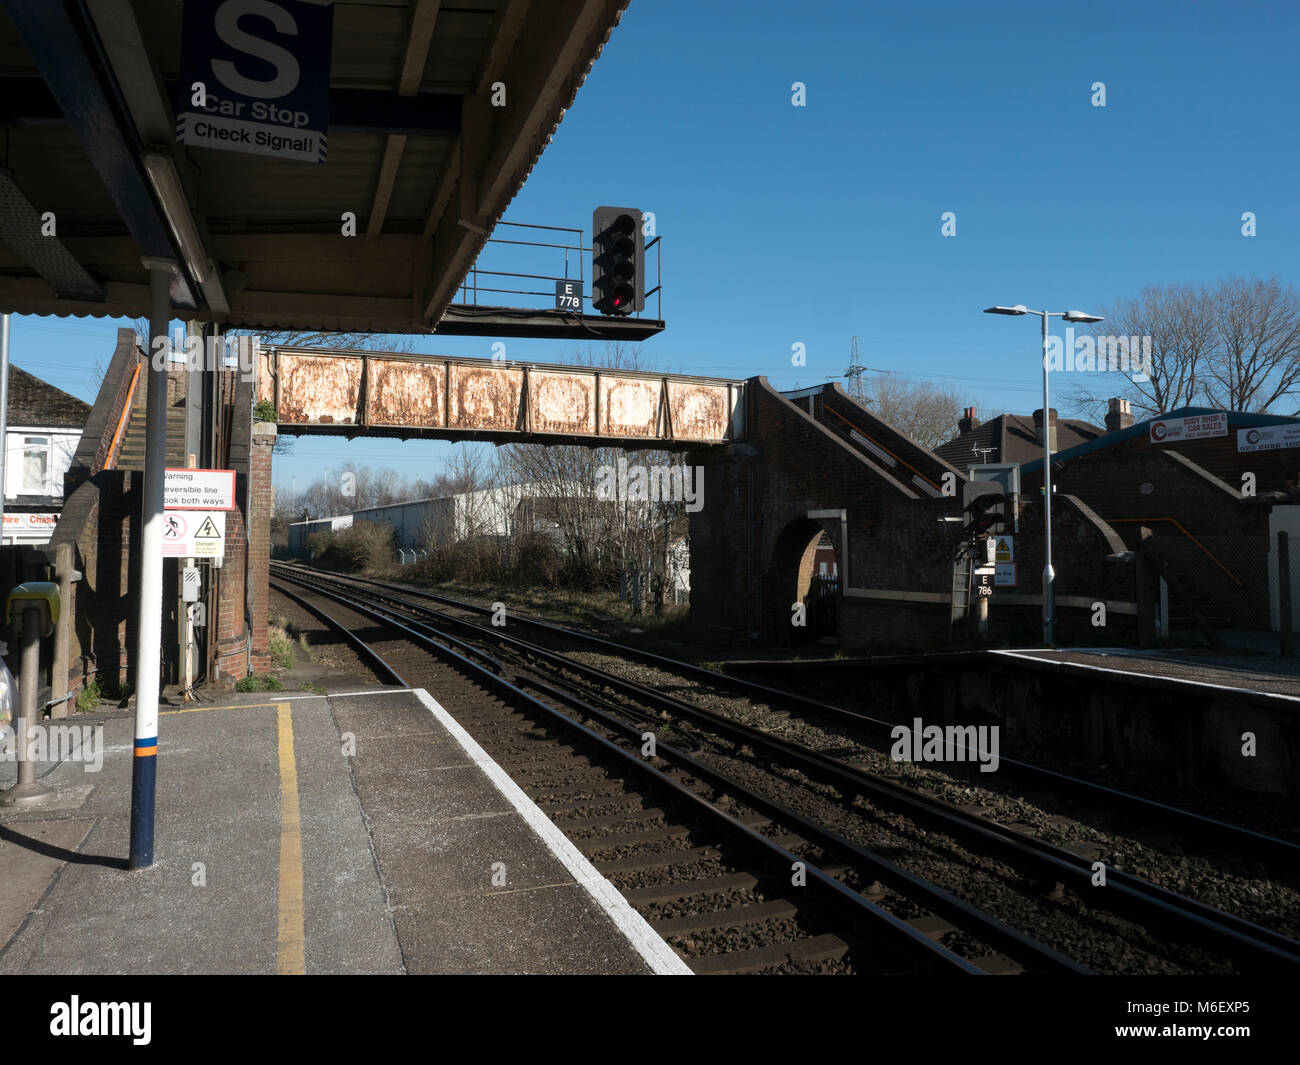 Railway station, Totton, New Forest, Hampshire, England, UK Stock Photo